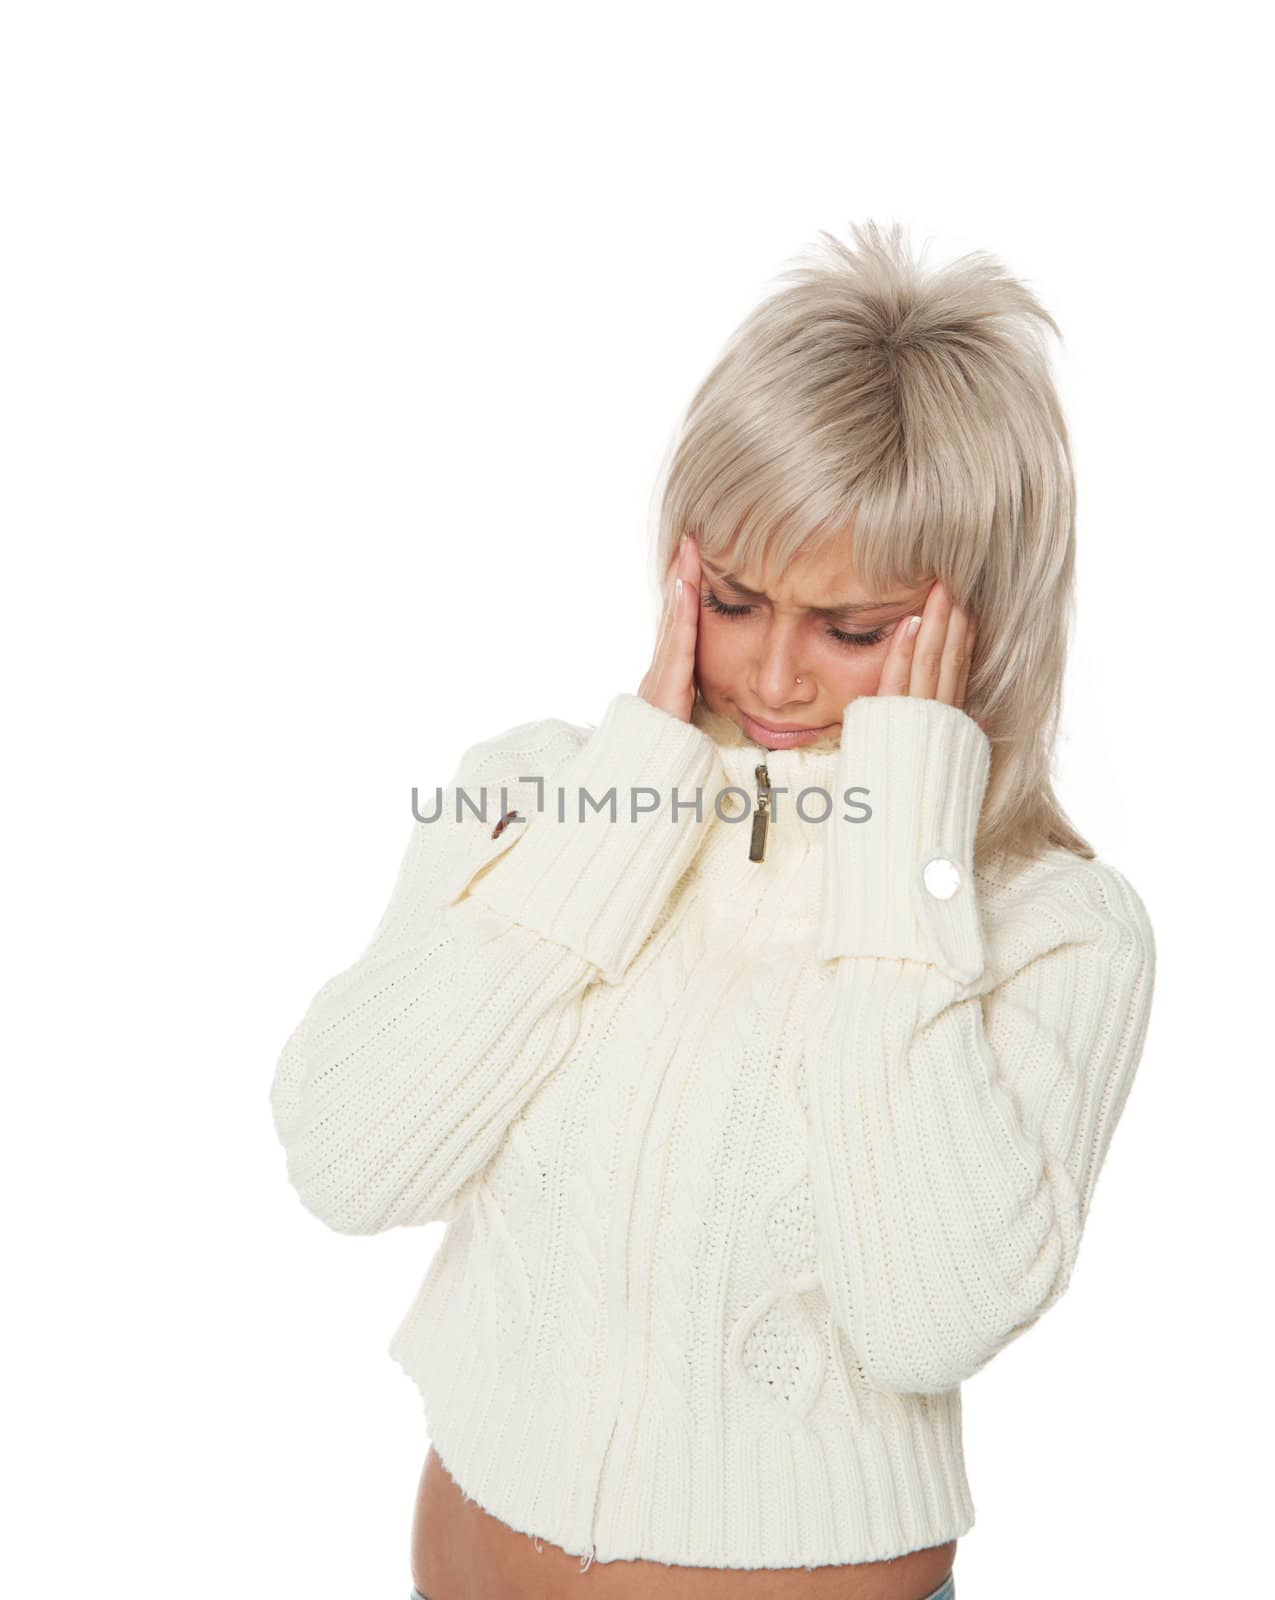 a woman in a white sweater headache by raduga21